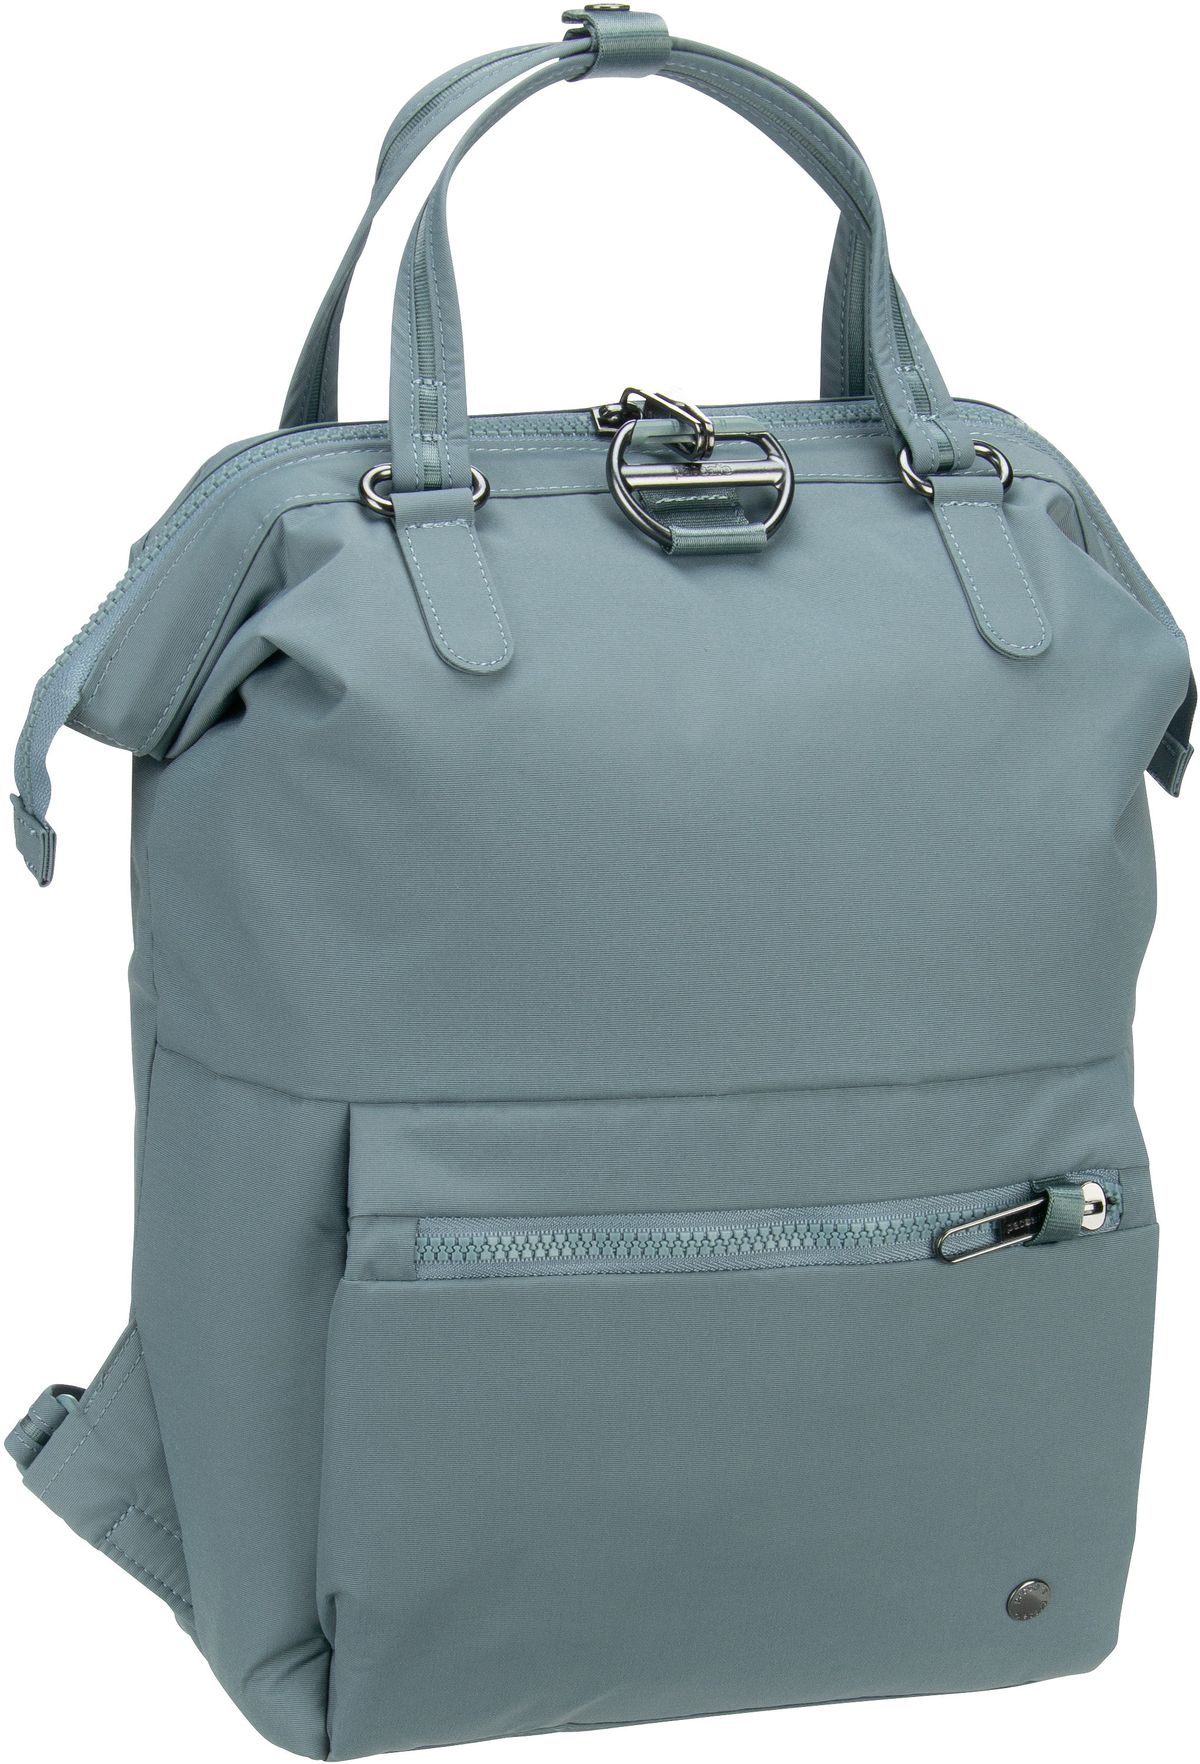 Pacsafe CX Mini Backpack  in Petrol (11 Liter), Rucksack / Backpack